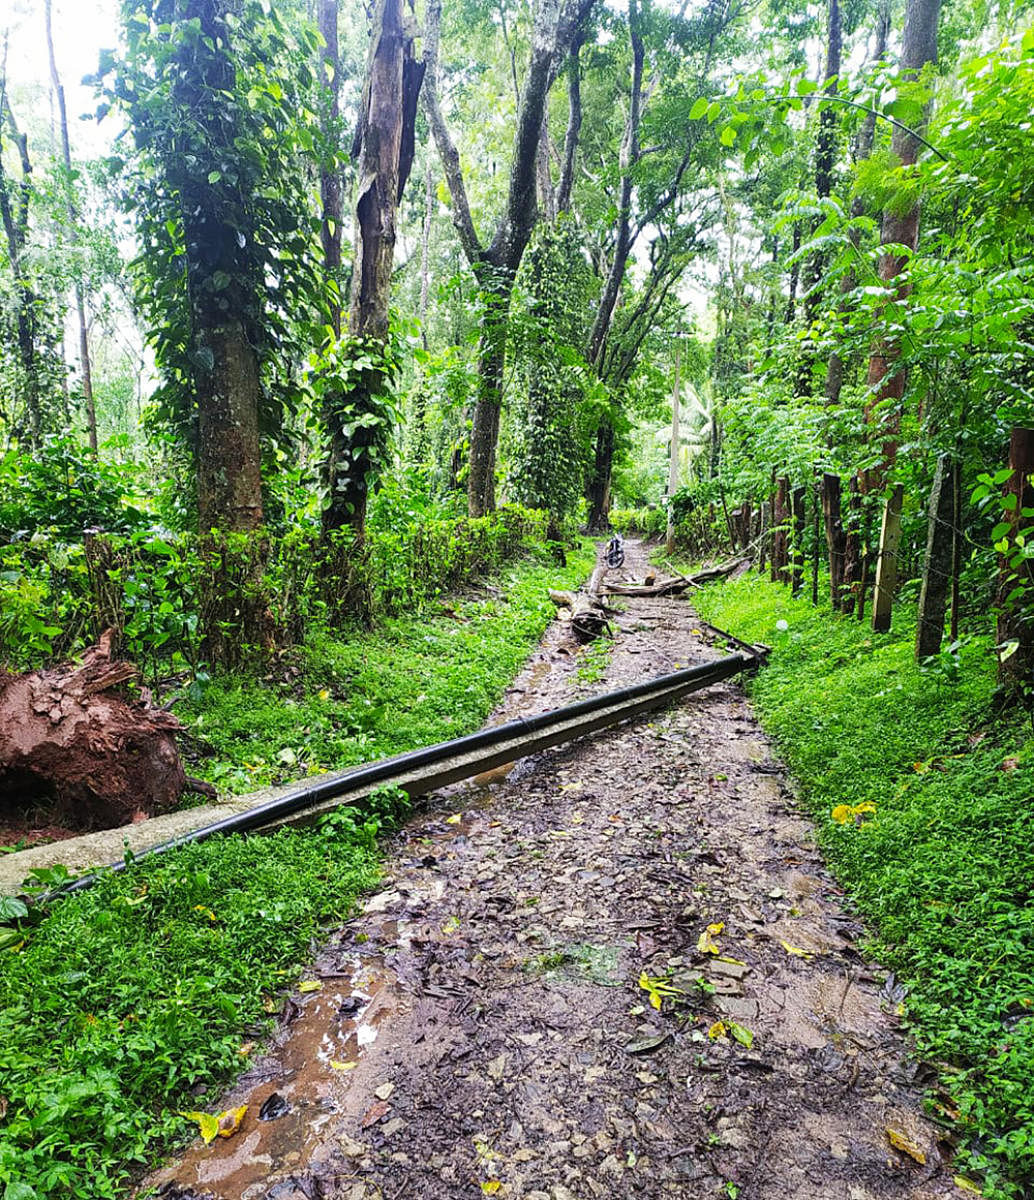 A tree and an electricity pole fell on Kalluru Road near Suntikoppa following the rain.